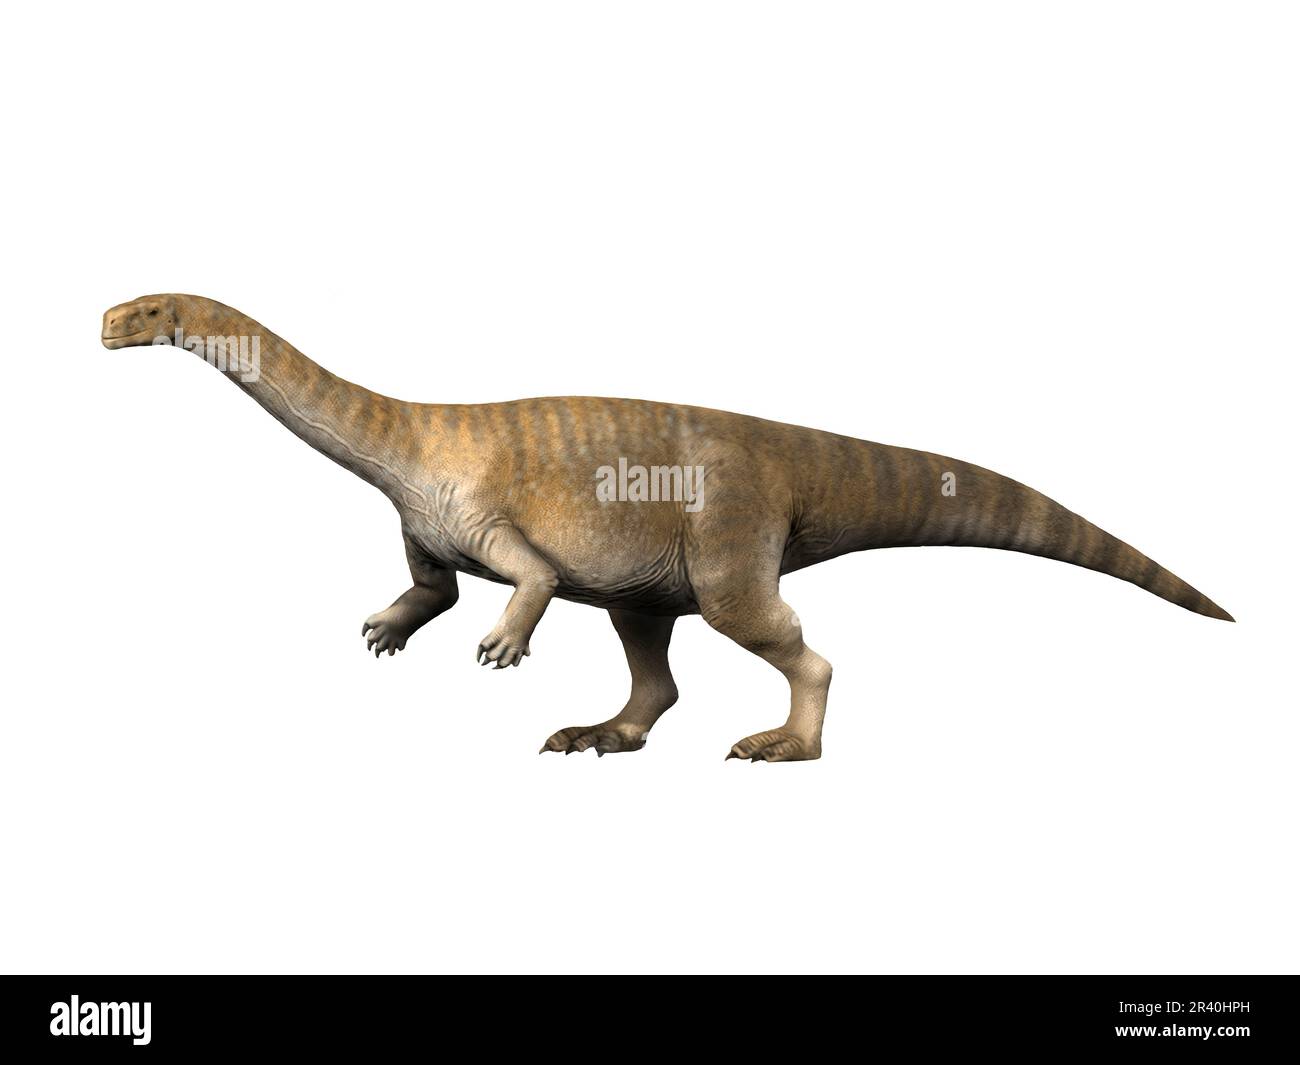 Lufengosaurus dinosaur, Early Jurassic period of China. Stock Photo